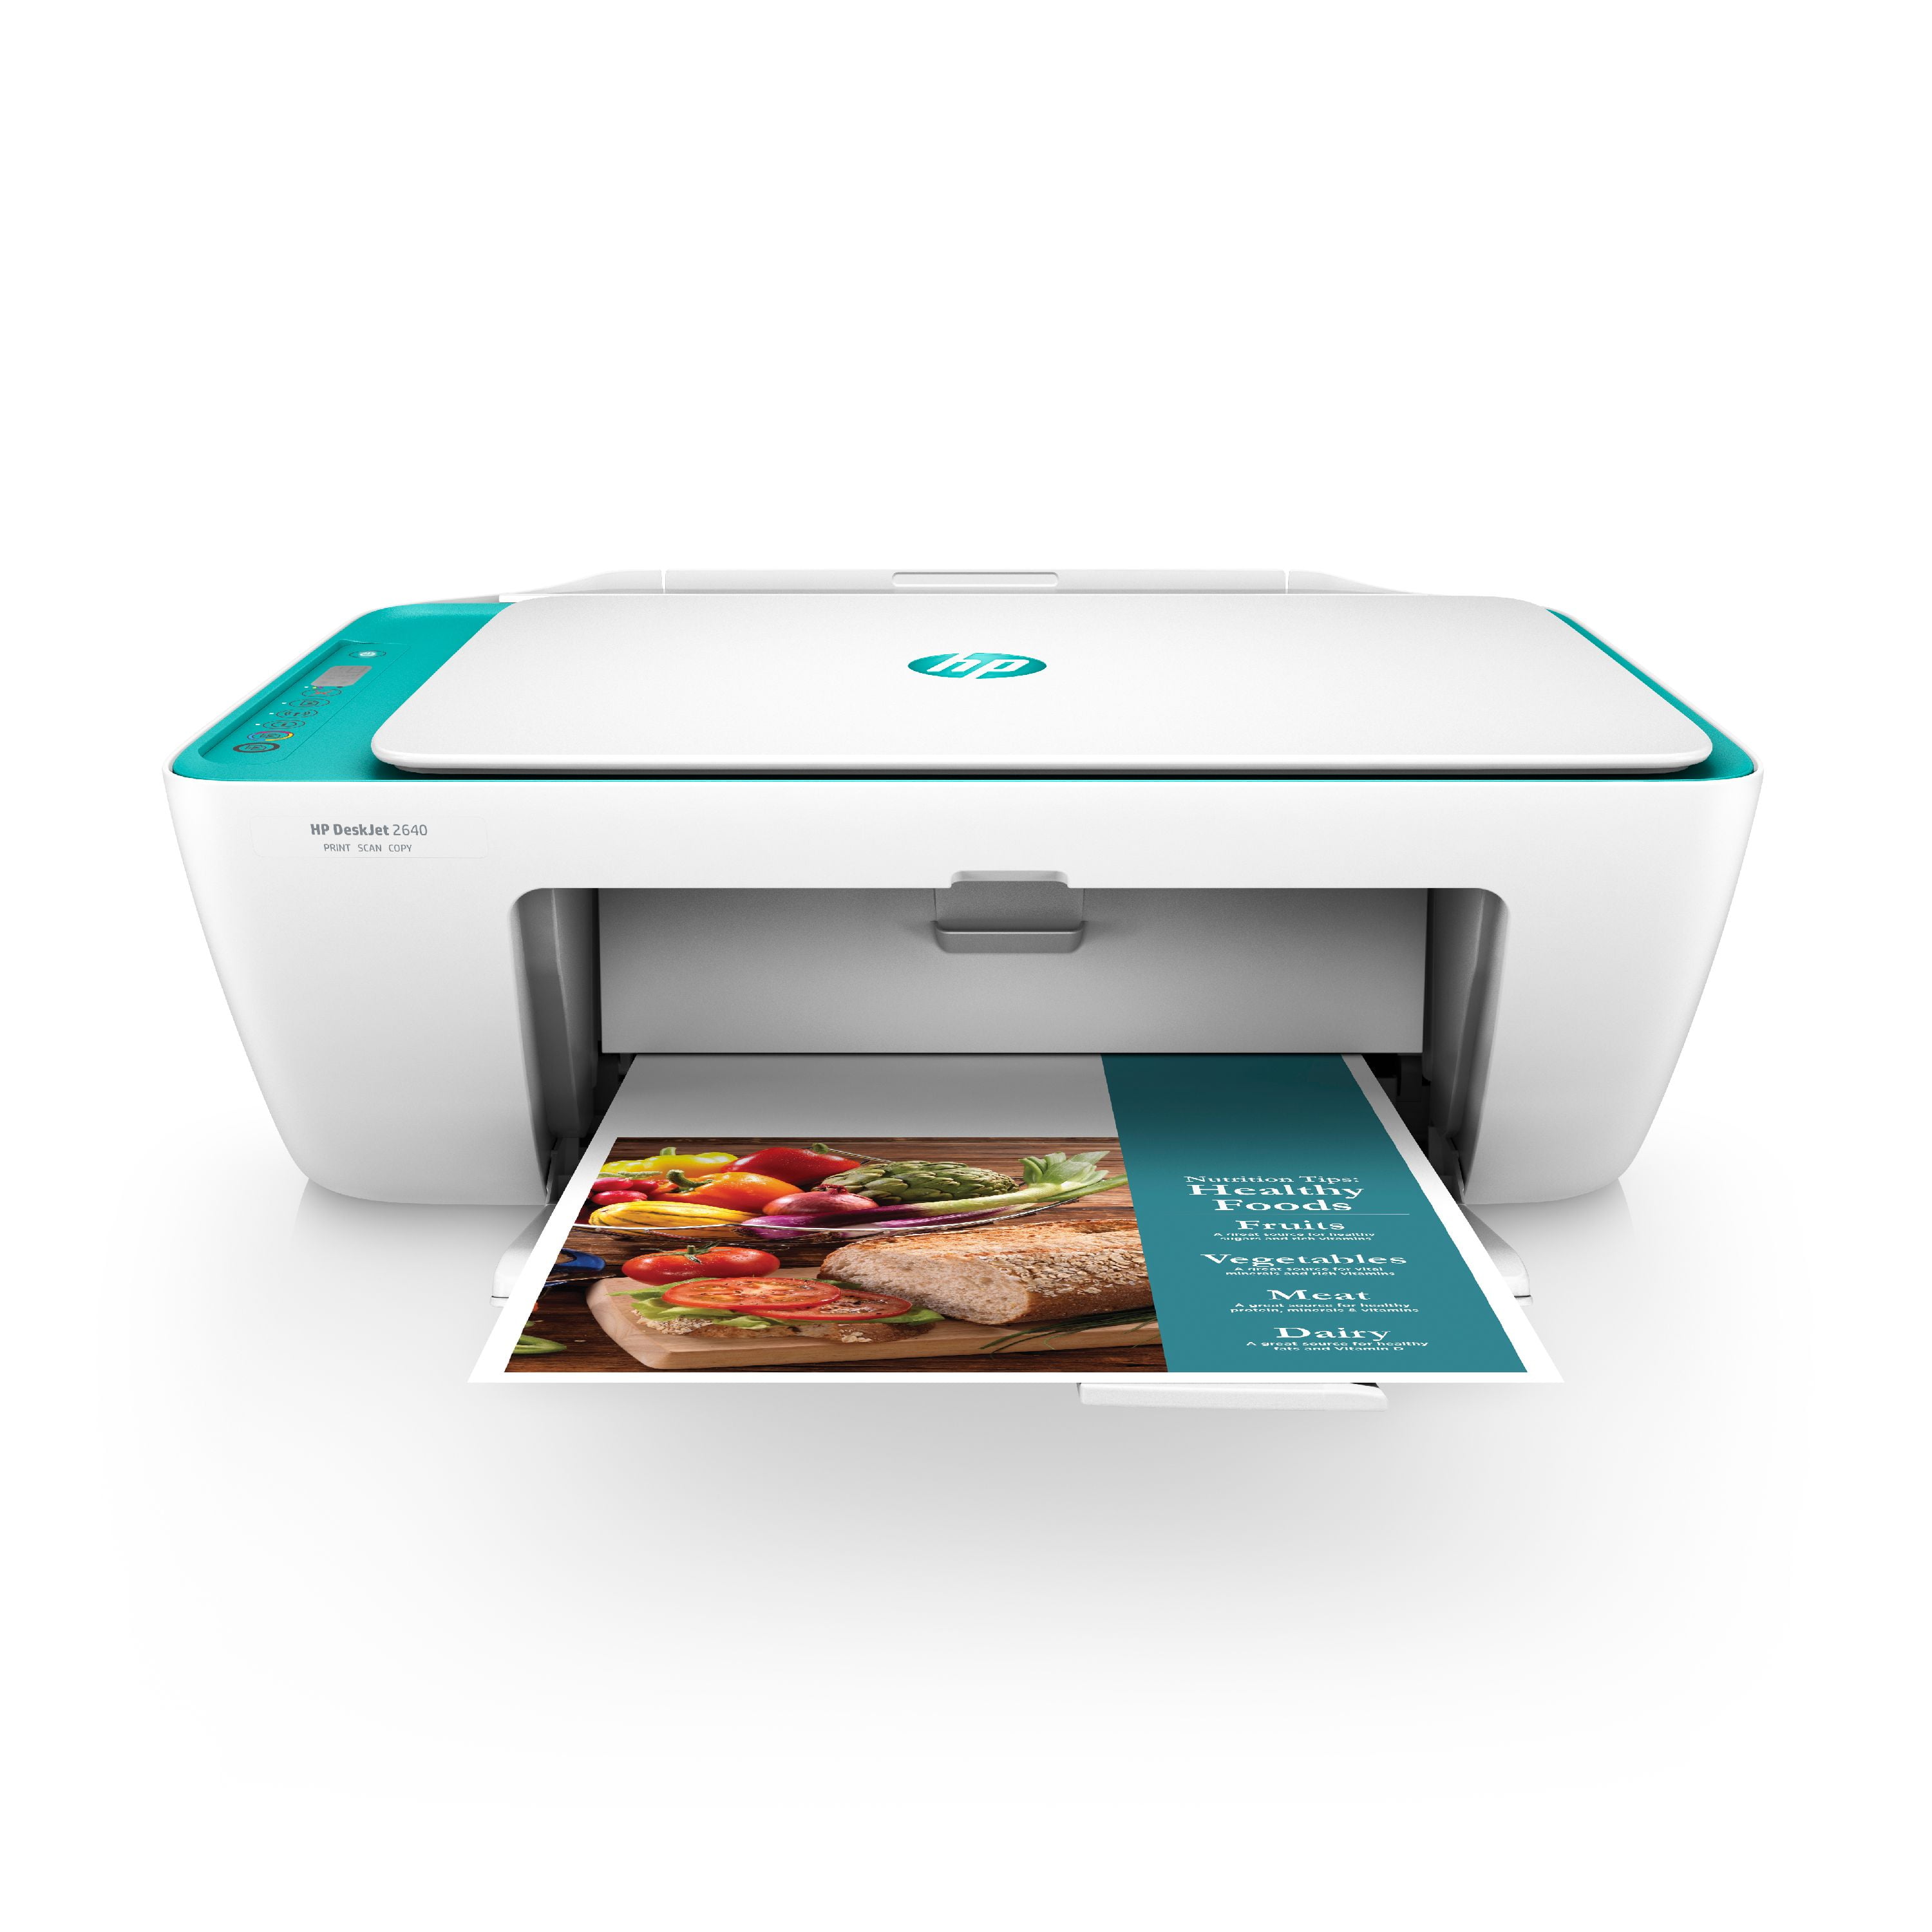 HP DeskJet 2640 All-in-One Wireless Color Inkjet Printer (White/Teal) -  Instant Ink Ready